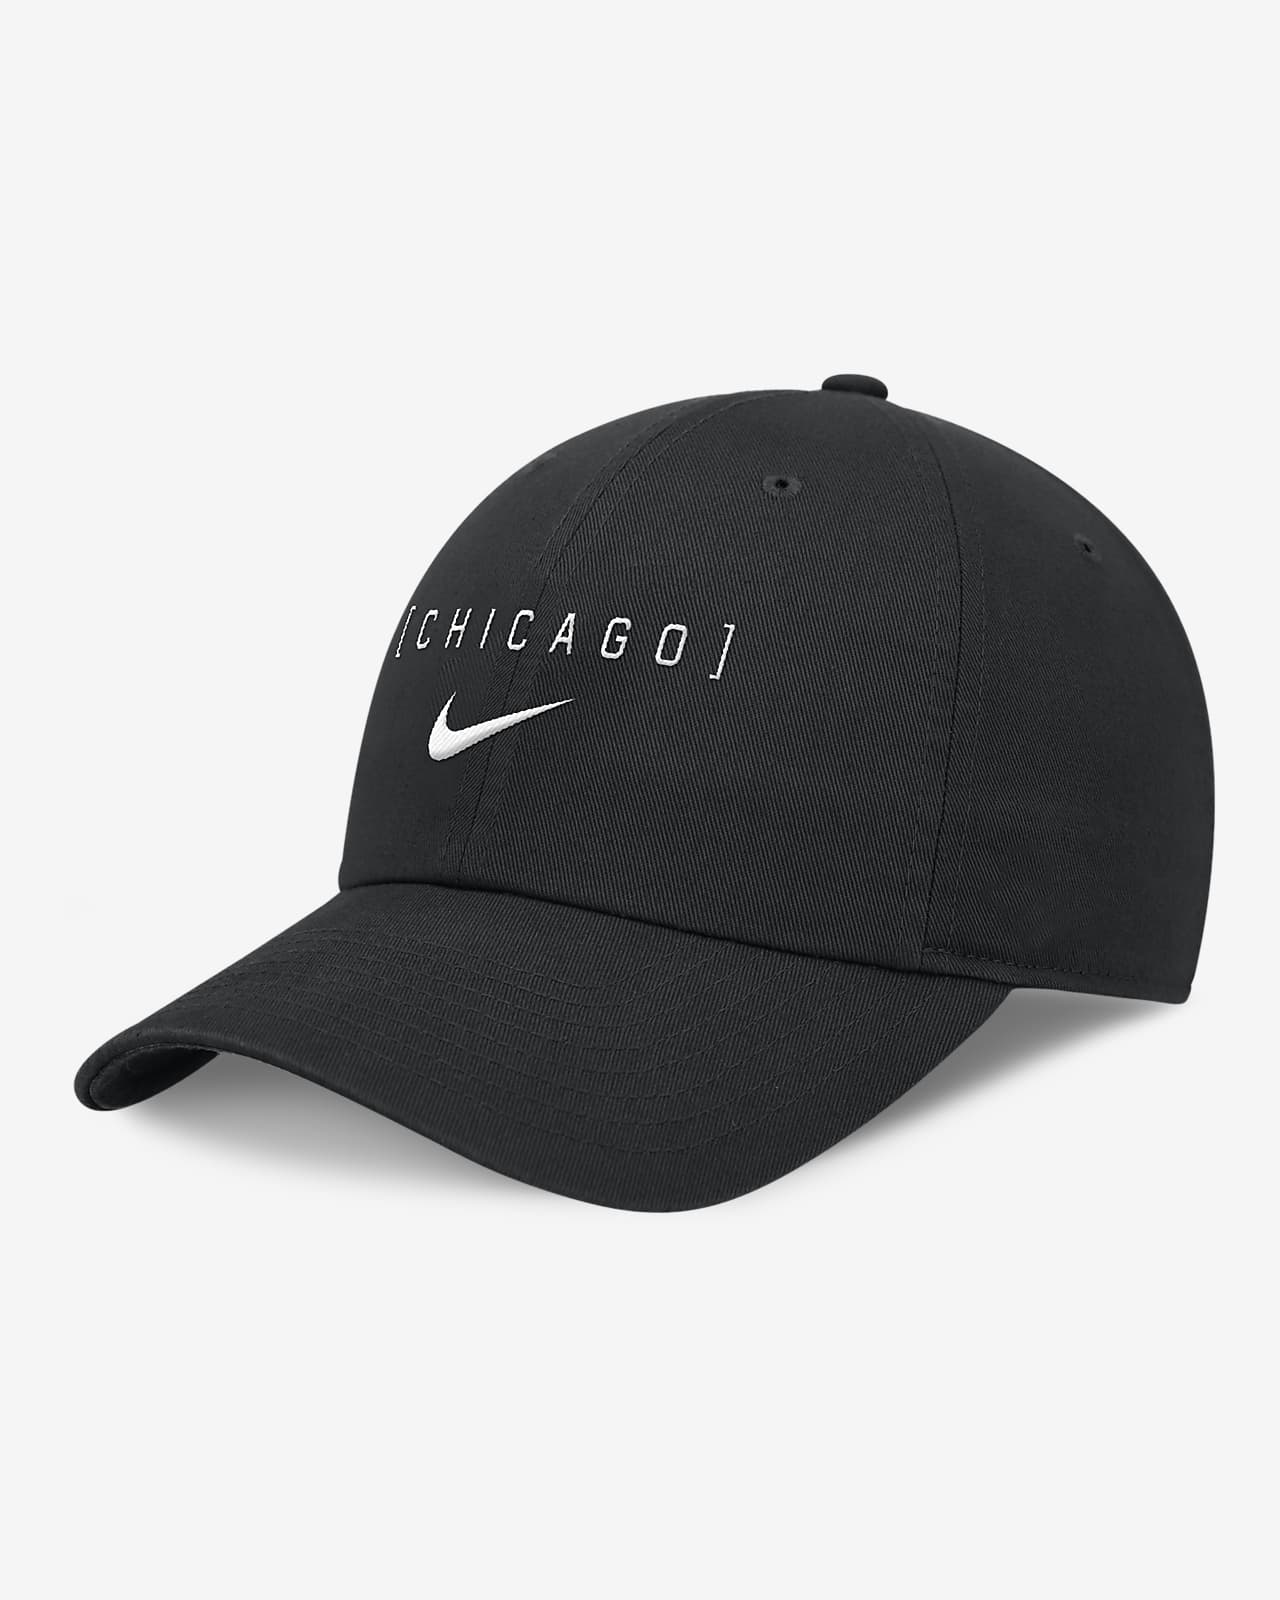 Chicago White Sox Primetime Club Men's Nike MLB Adjustable Hat